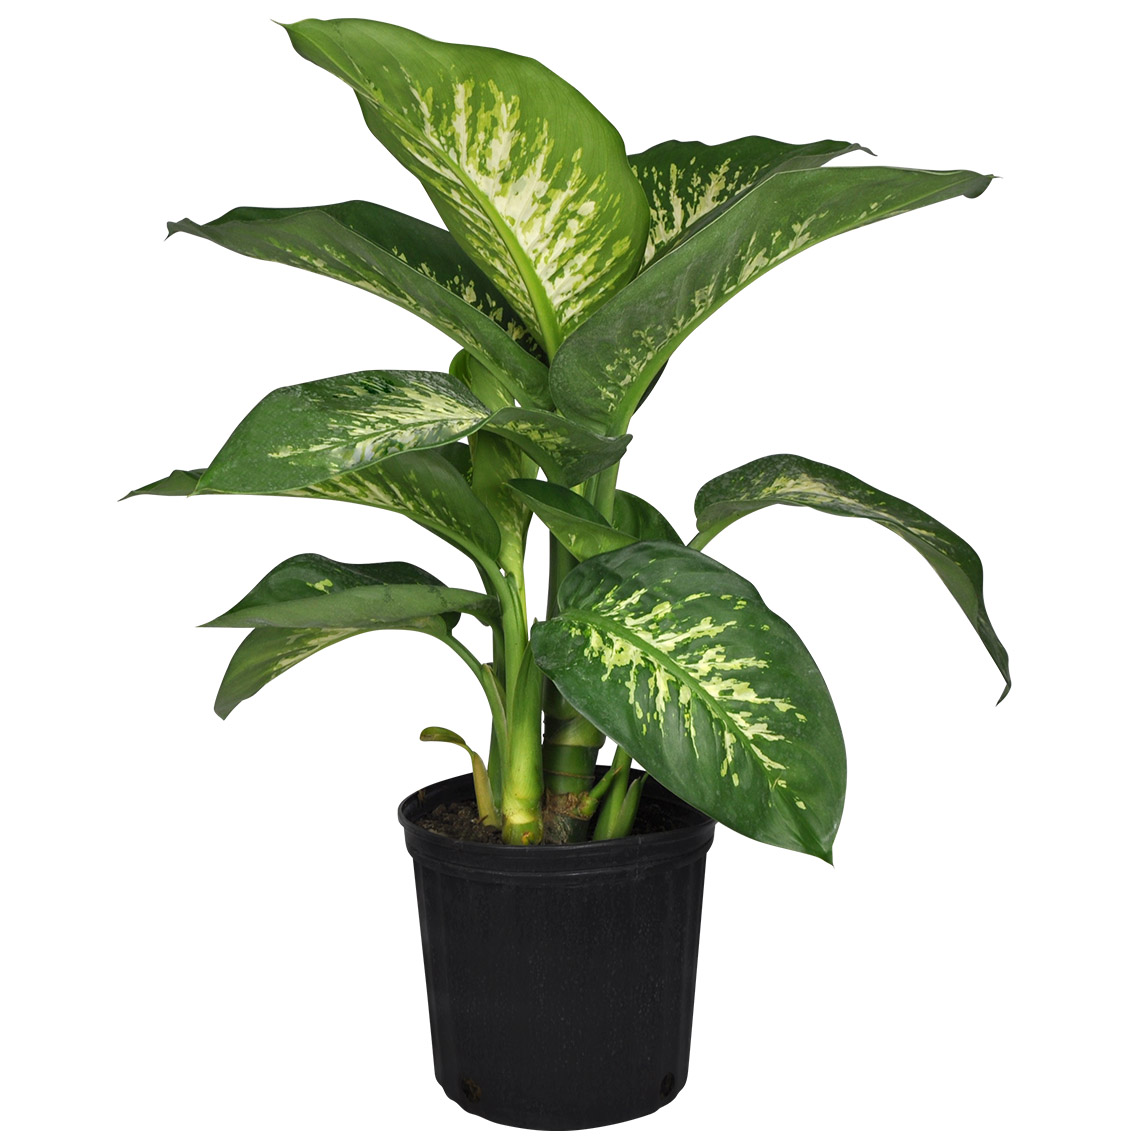 https://www.planterra.ca/images/tropical_plants/10in_diffenbachia_lrg.jpg